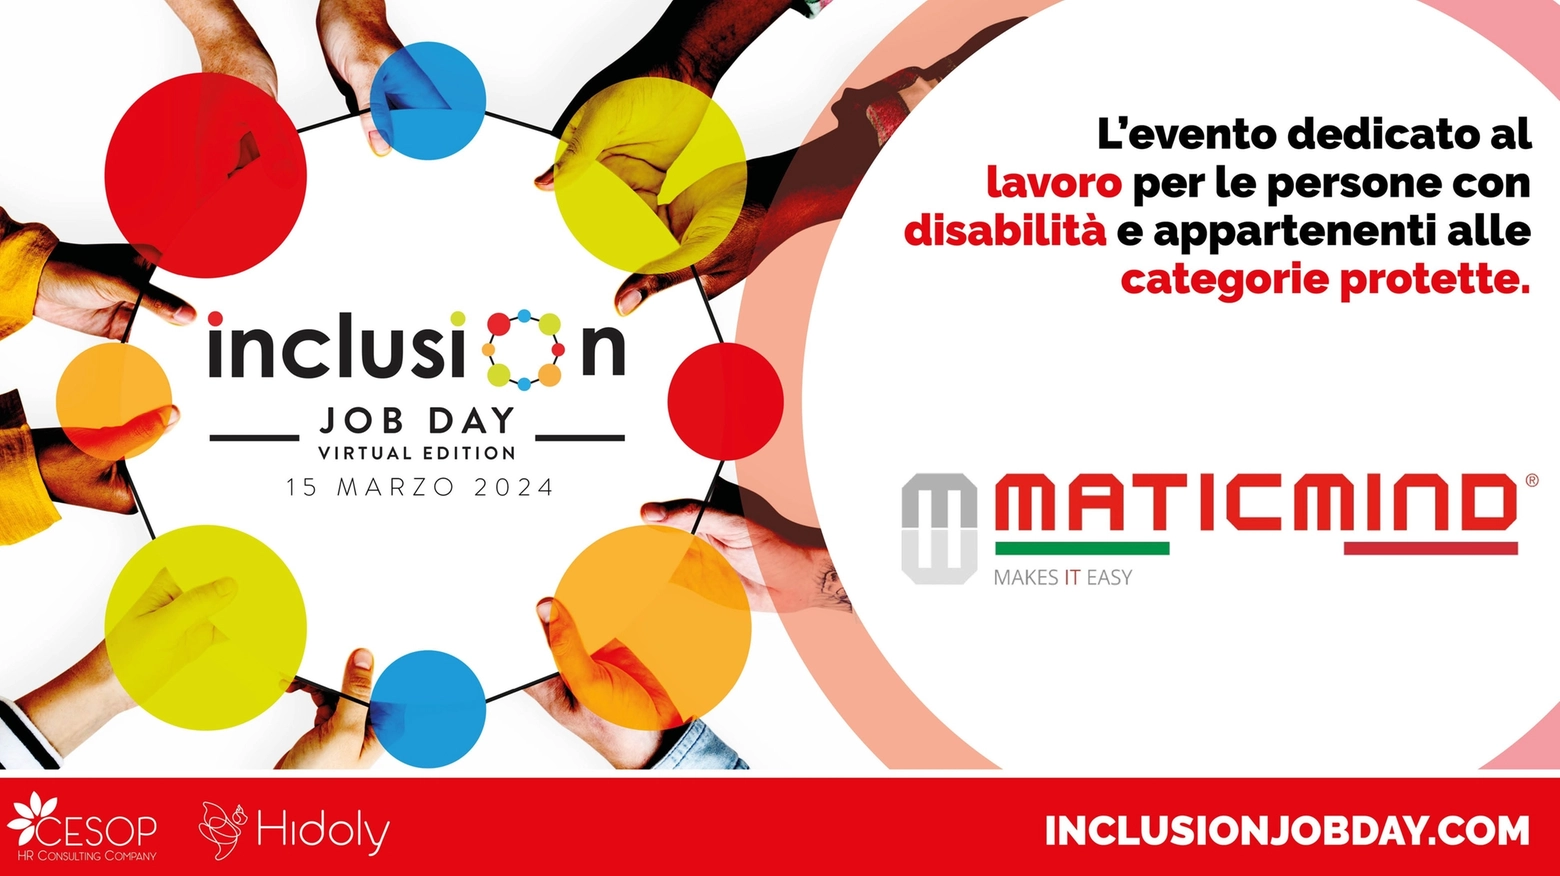 Maticmind partecipa all'Inclusion Job Day